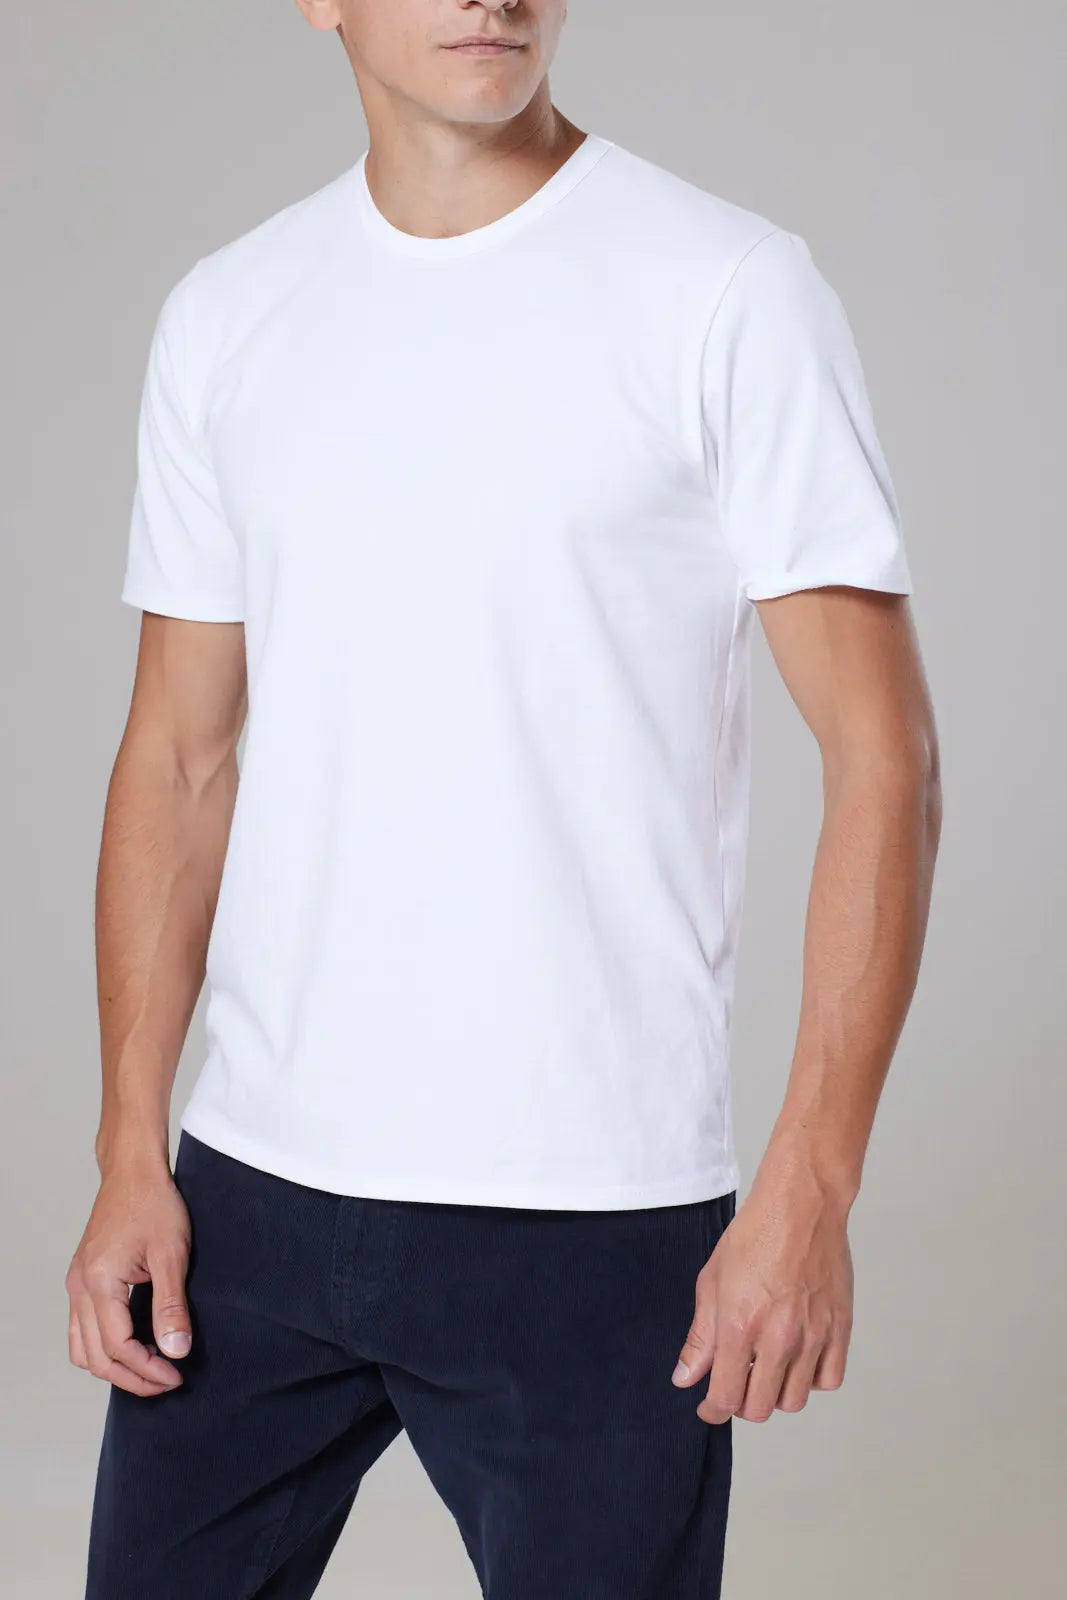 Trueman Short Sleeve Tee Shirt - White Wear London